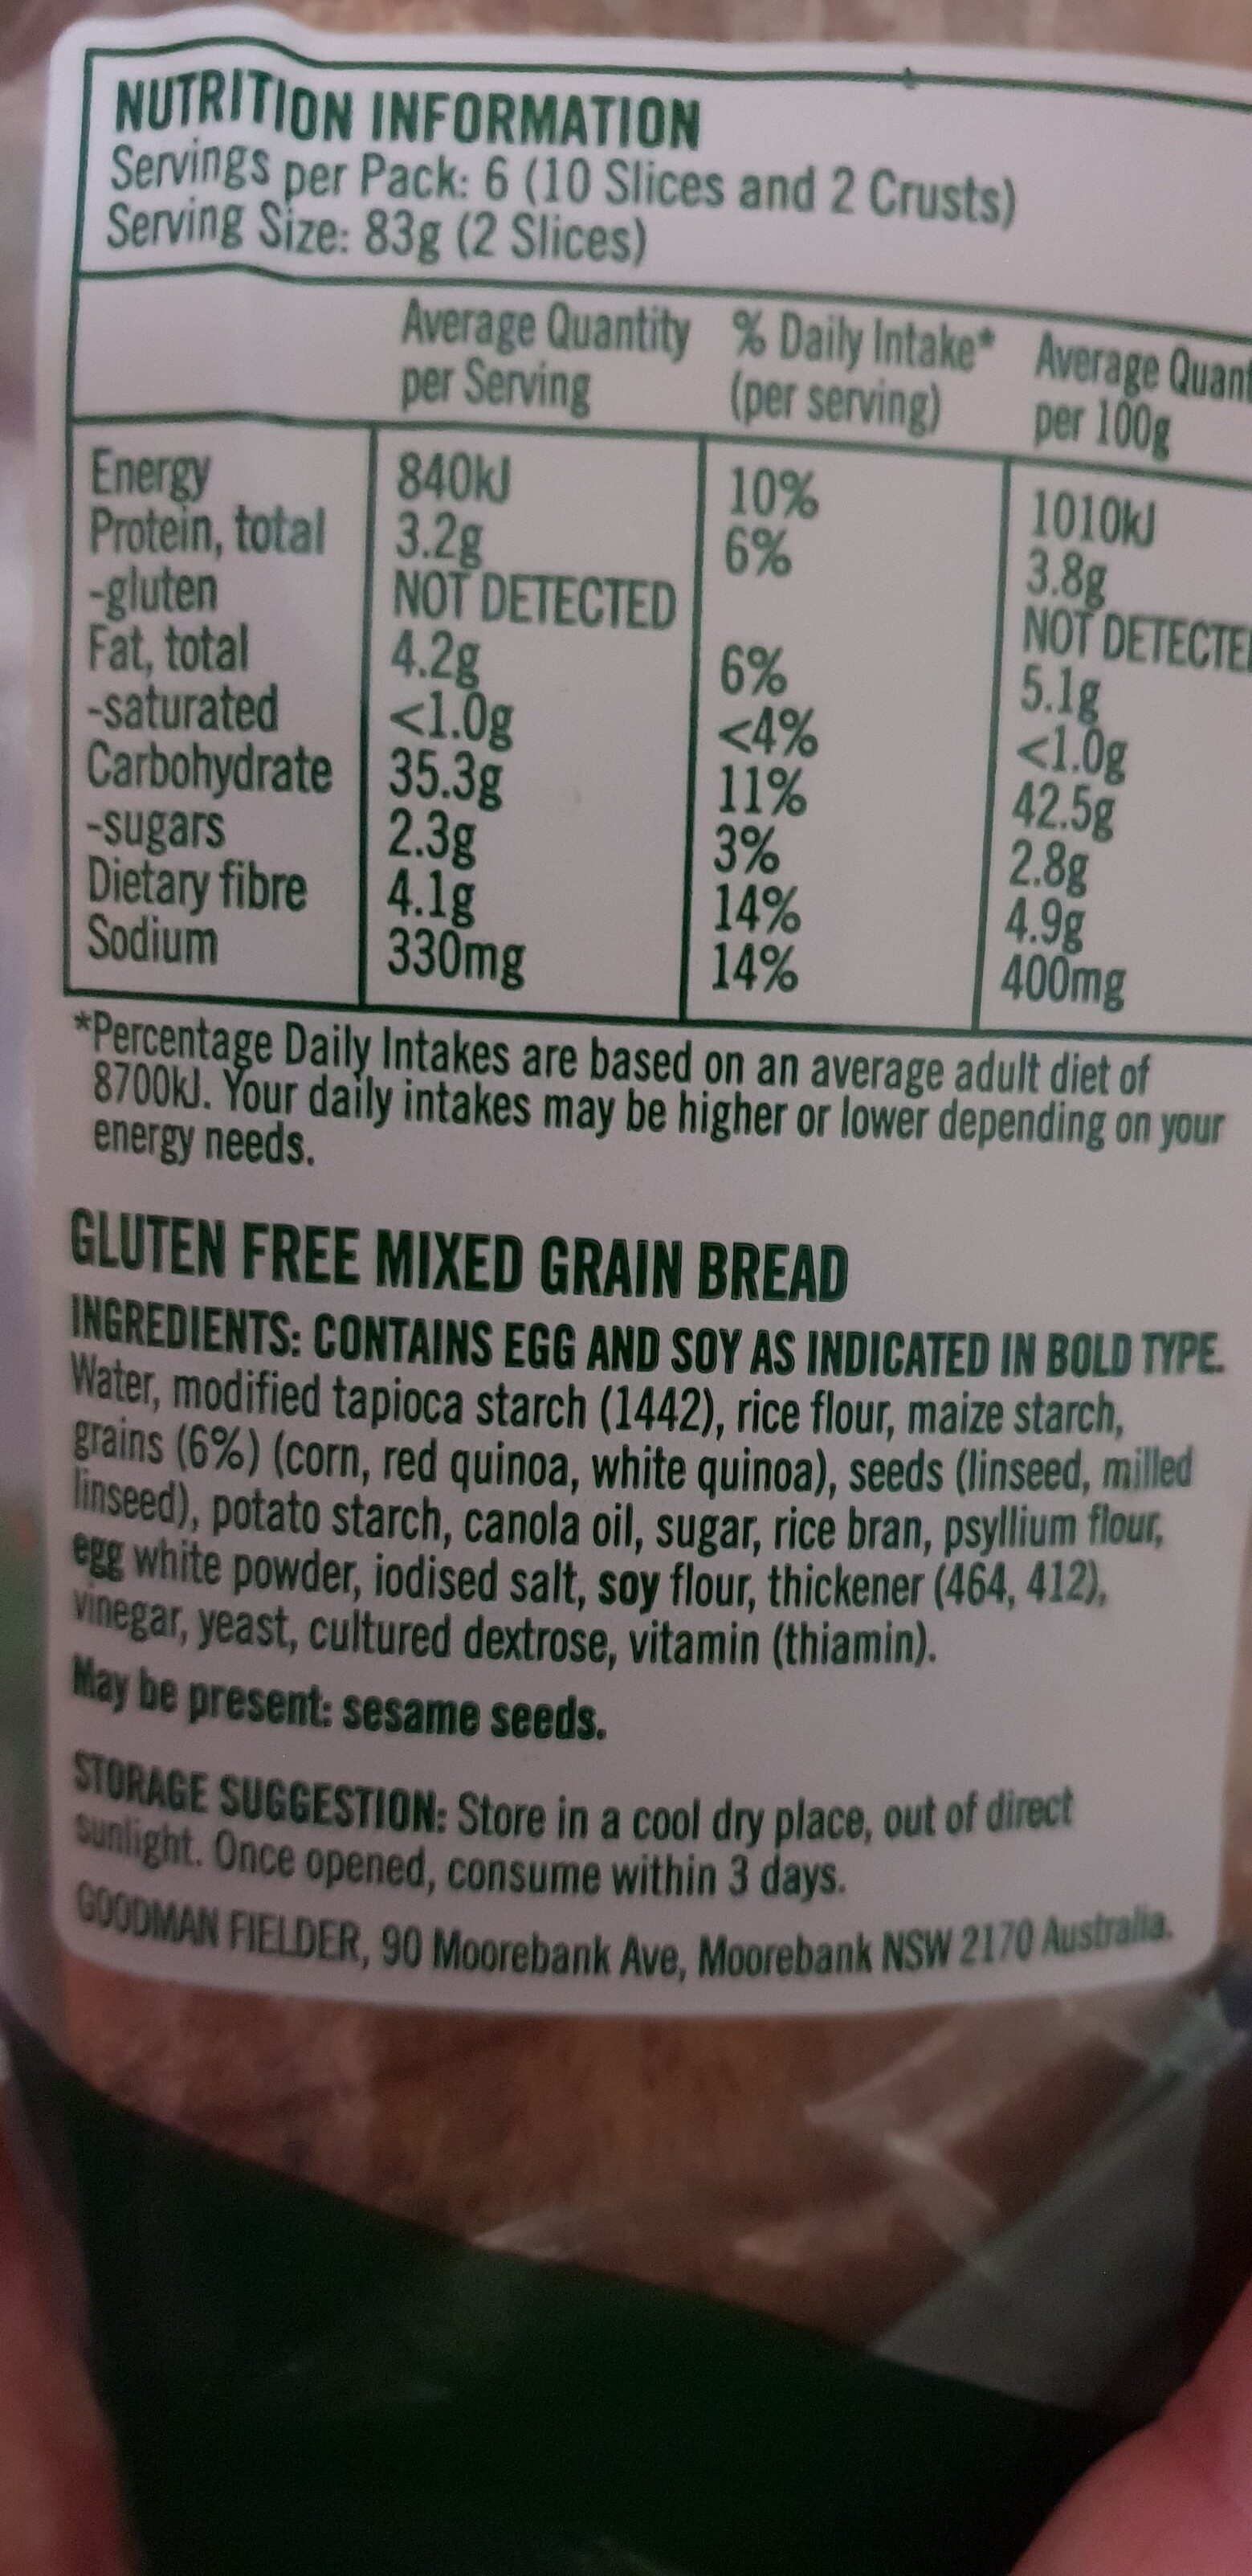 Gluten free mixed grain - Ingredients